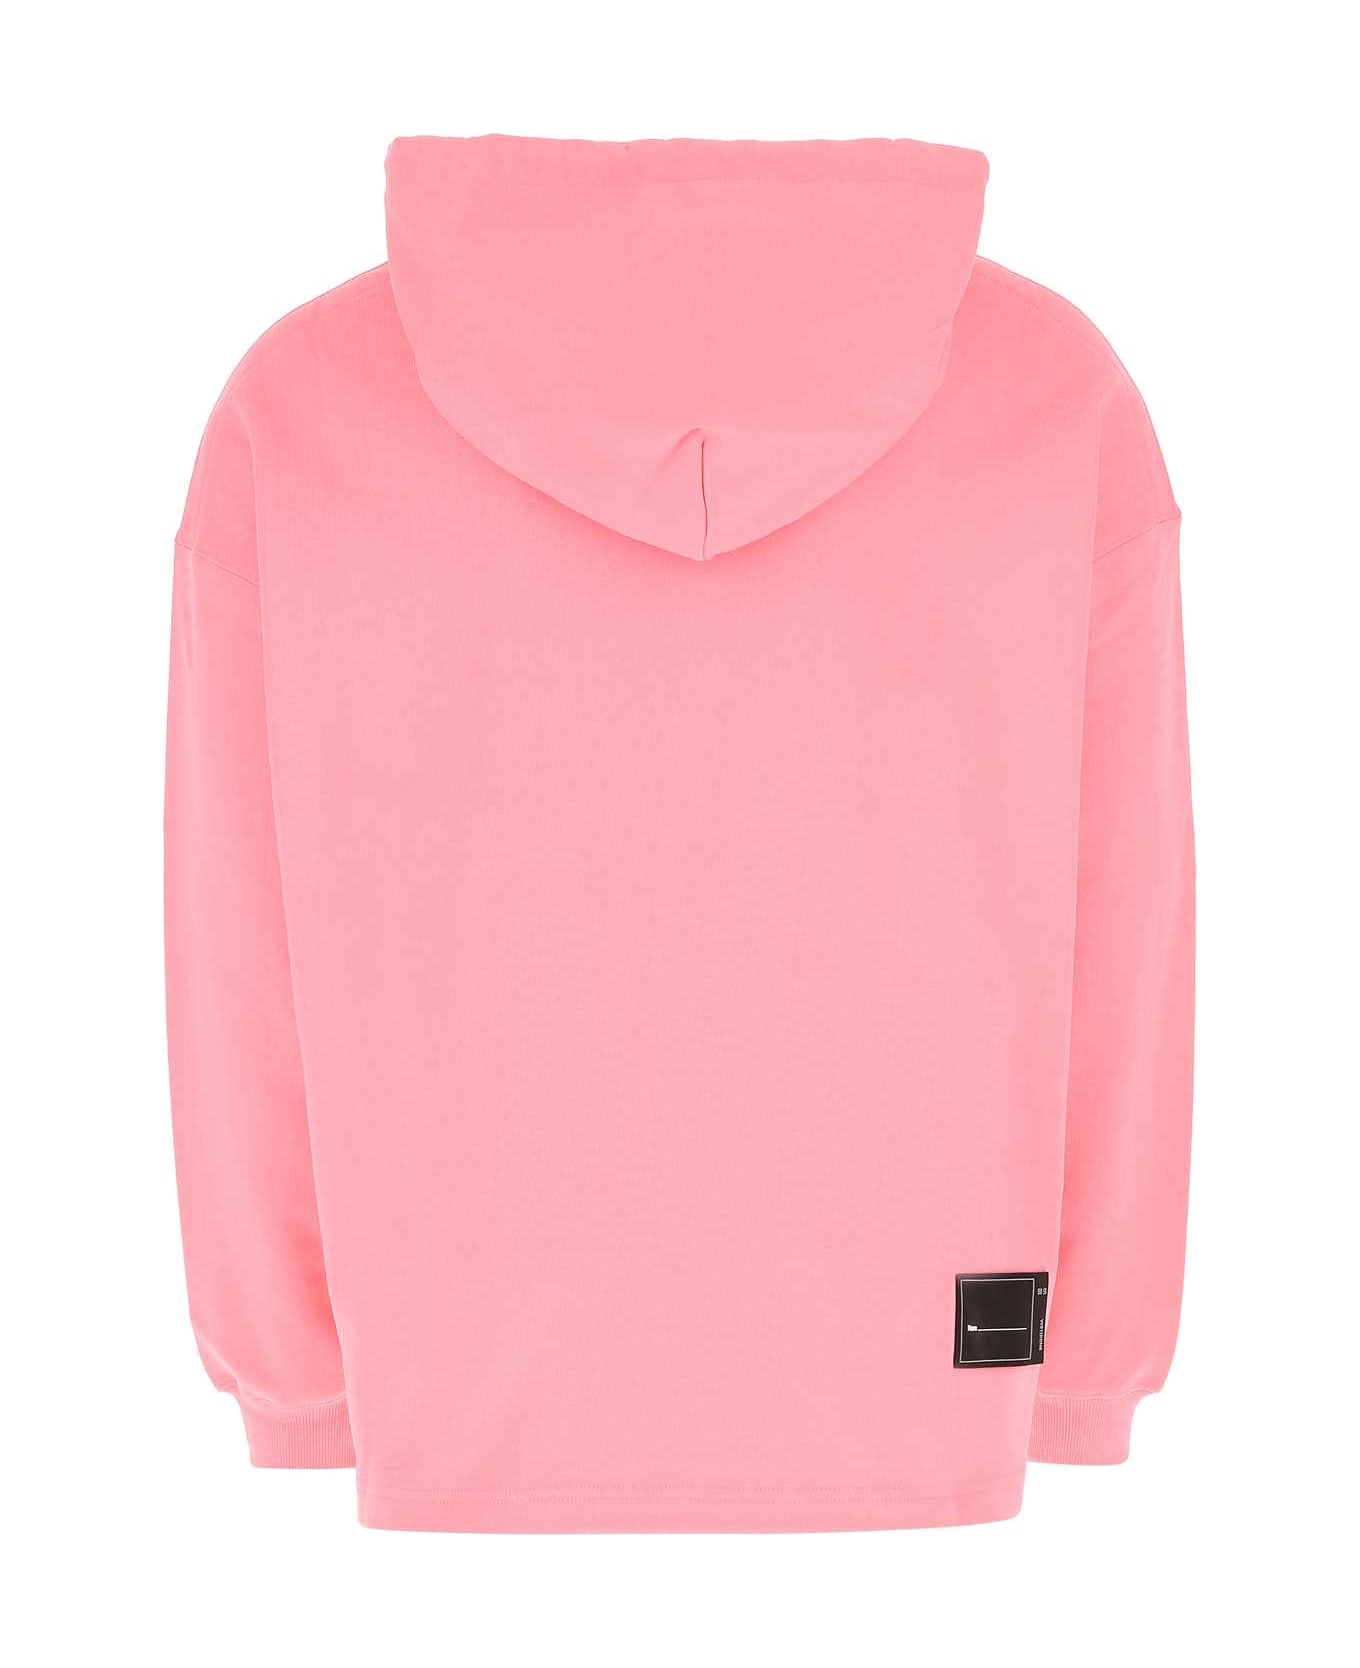 WE11 DONE Pink Cotton Sweatshirt - PINK